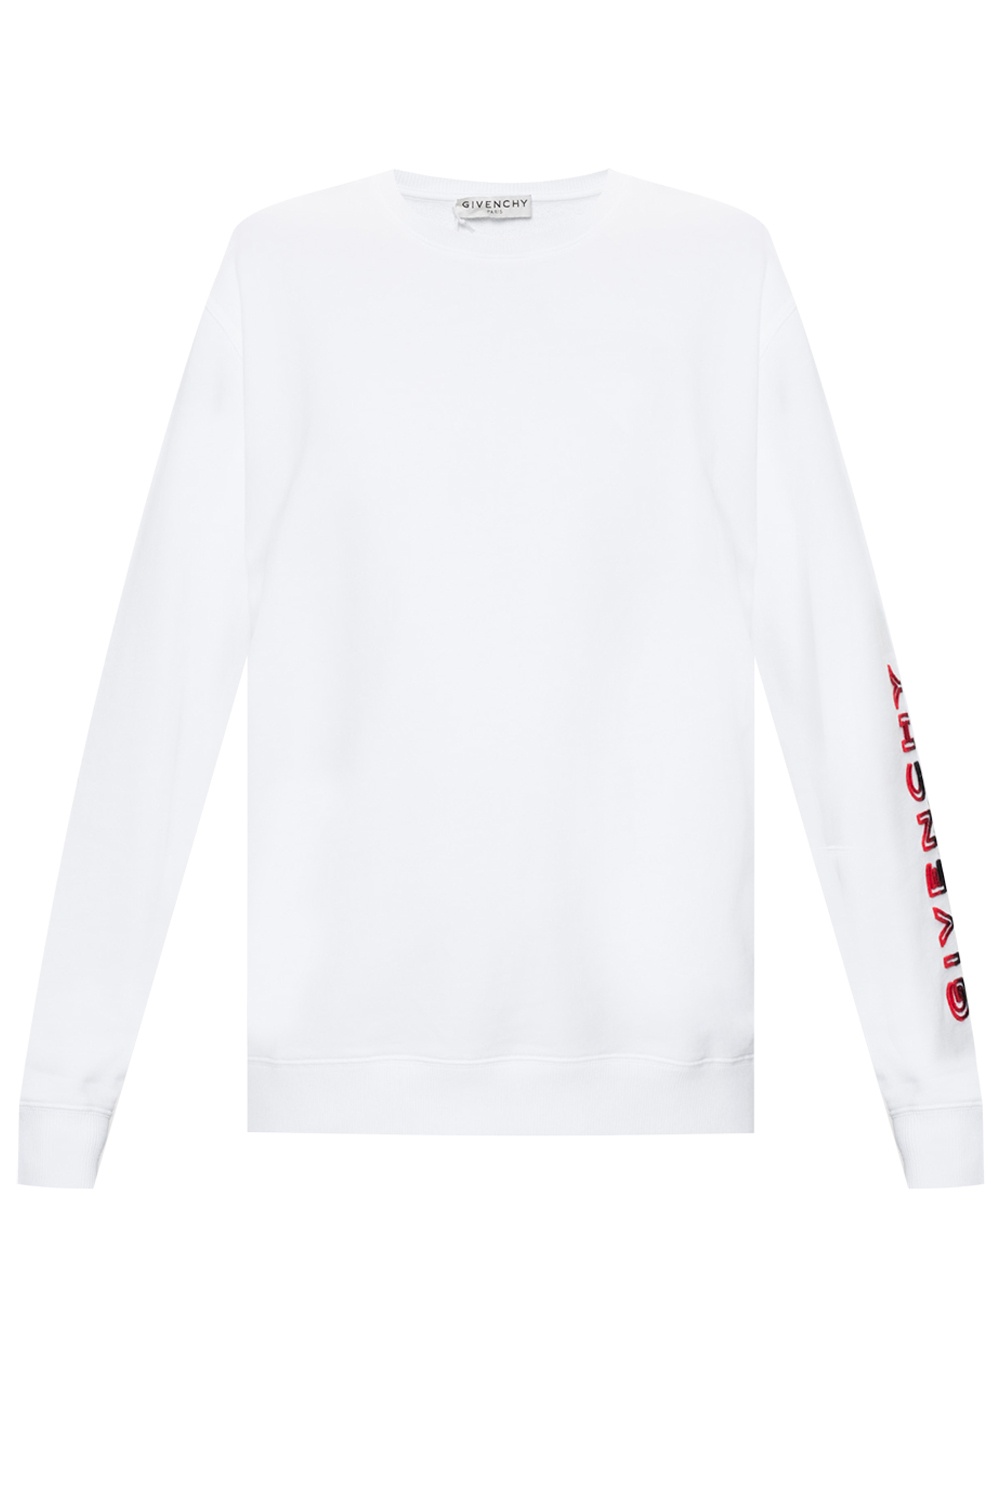 givenchy sweatshirt white